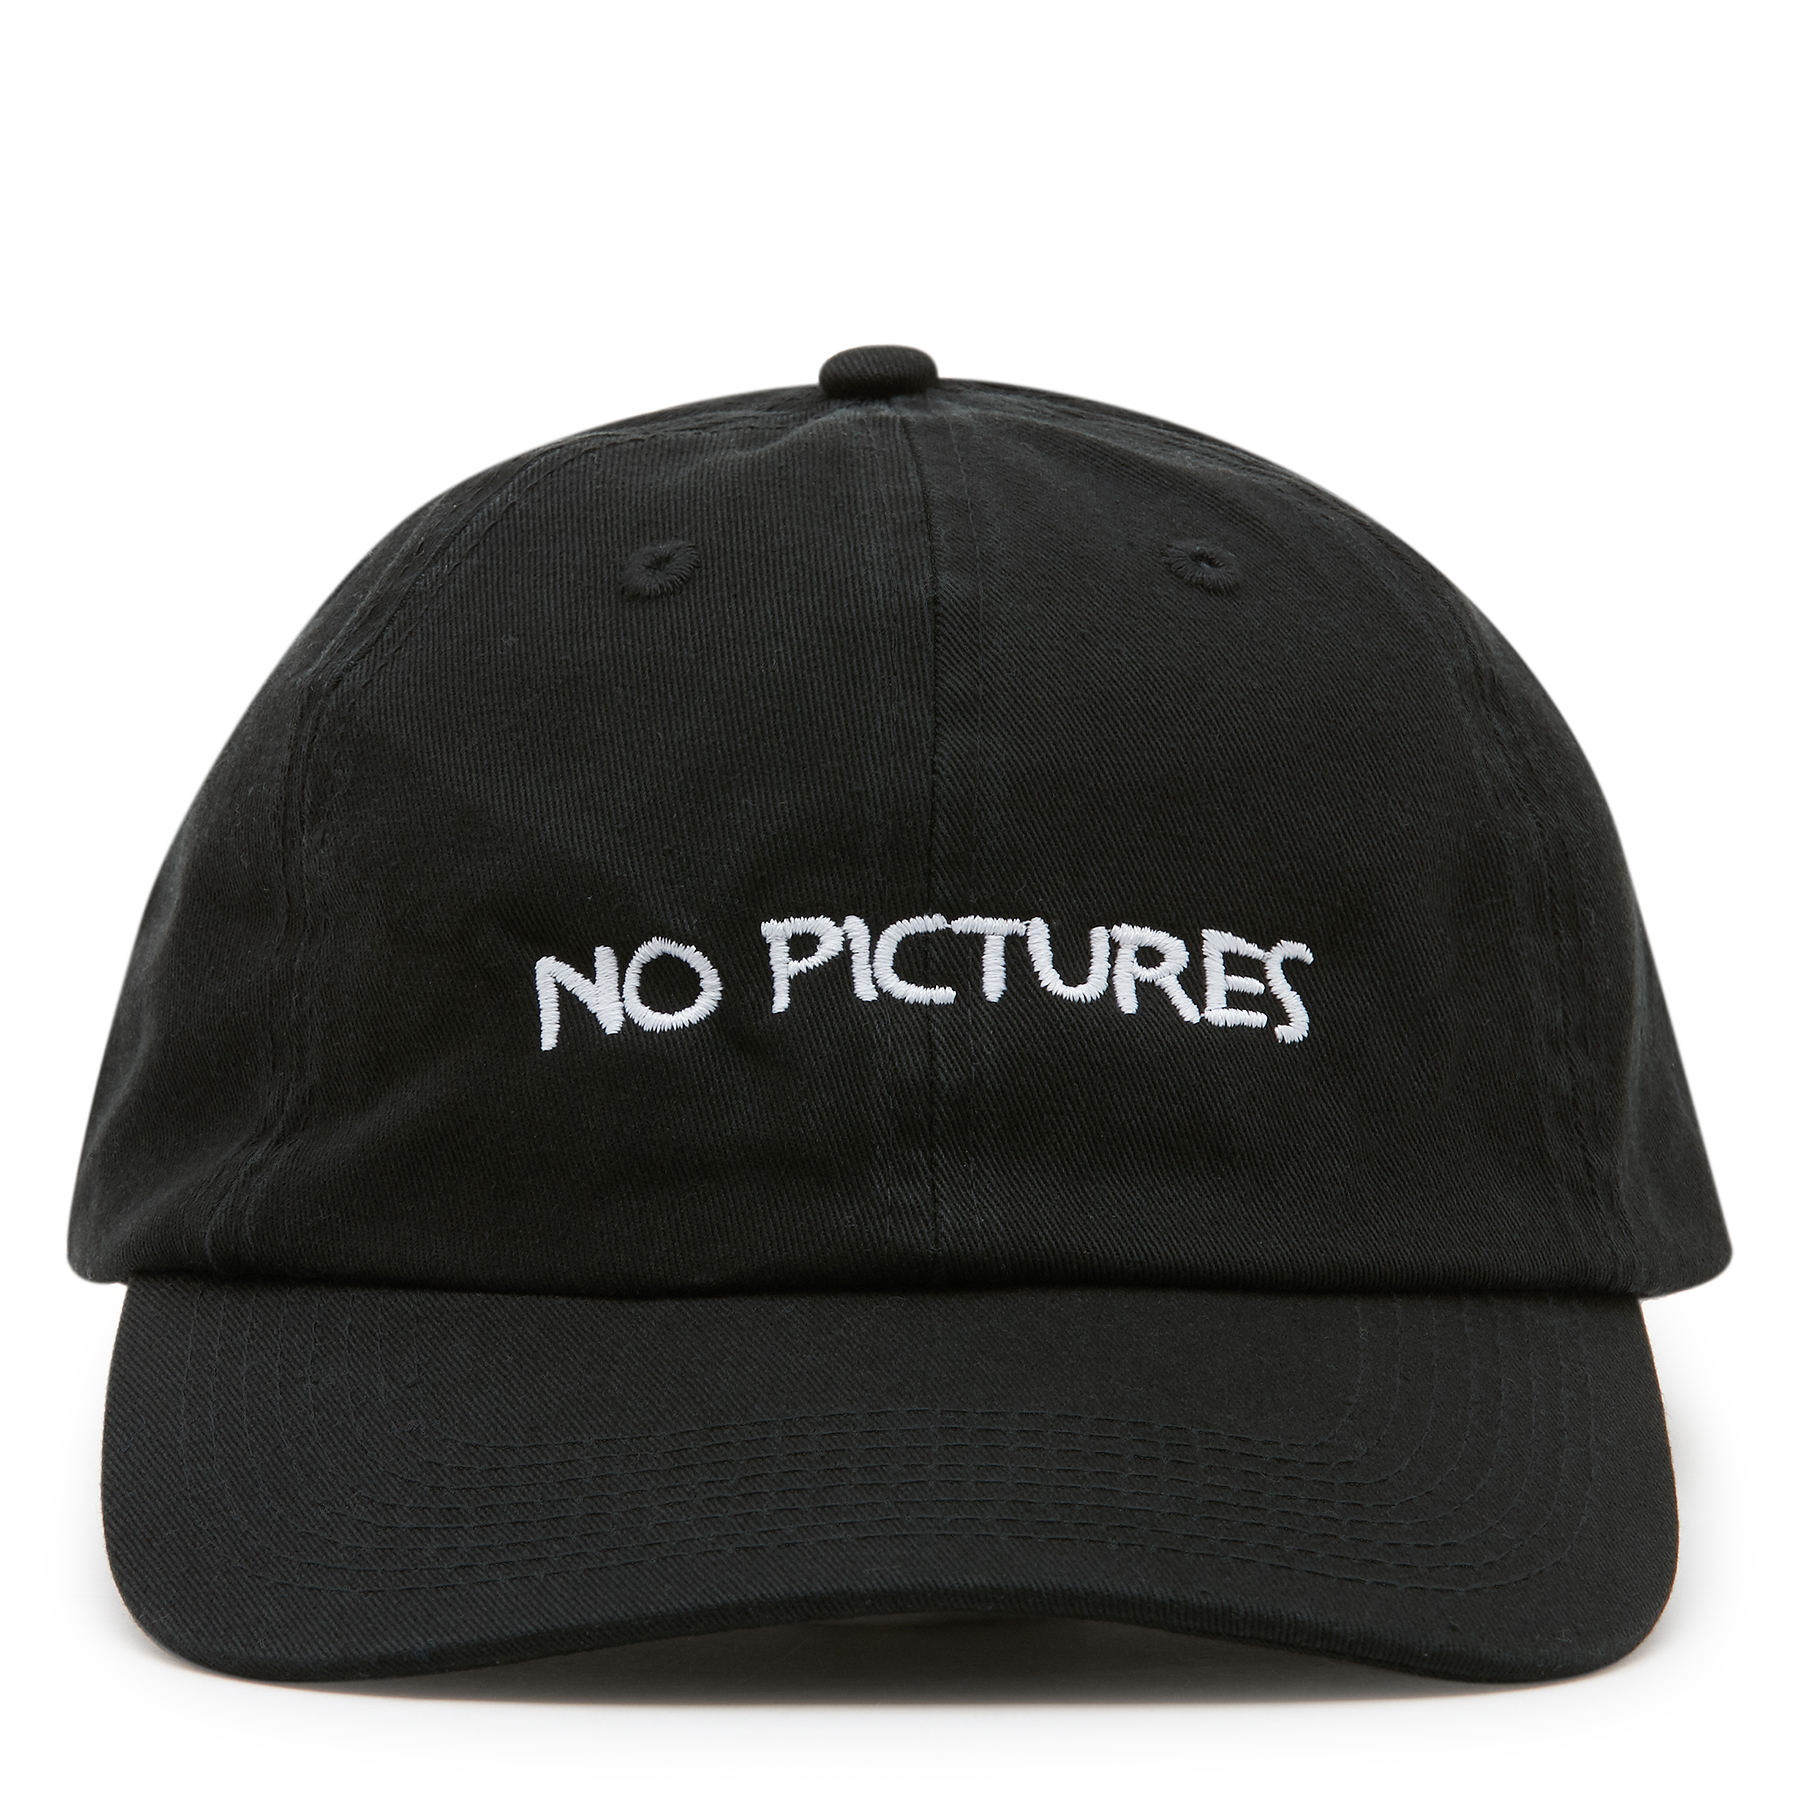 No Pictures cap